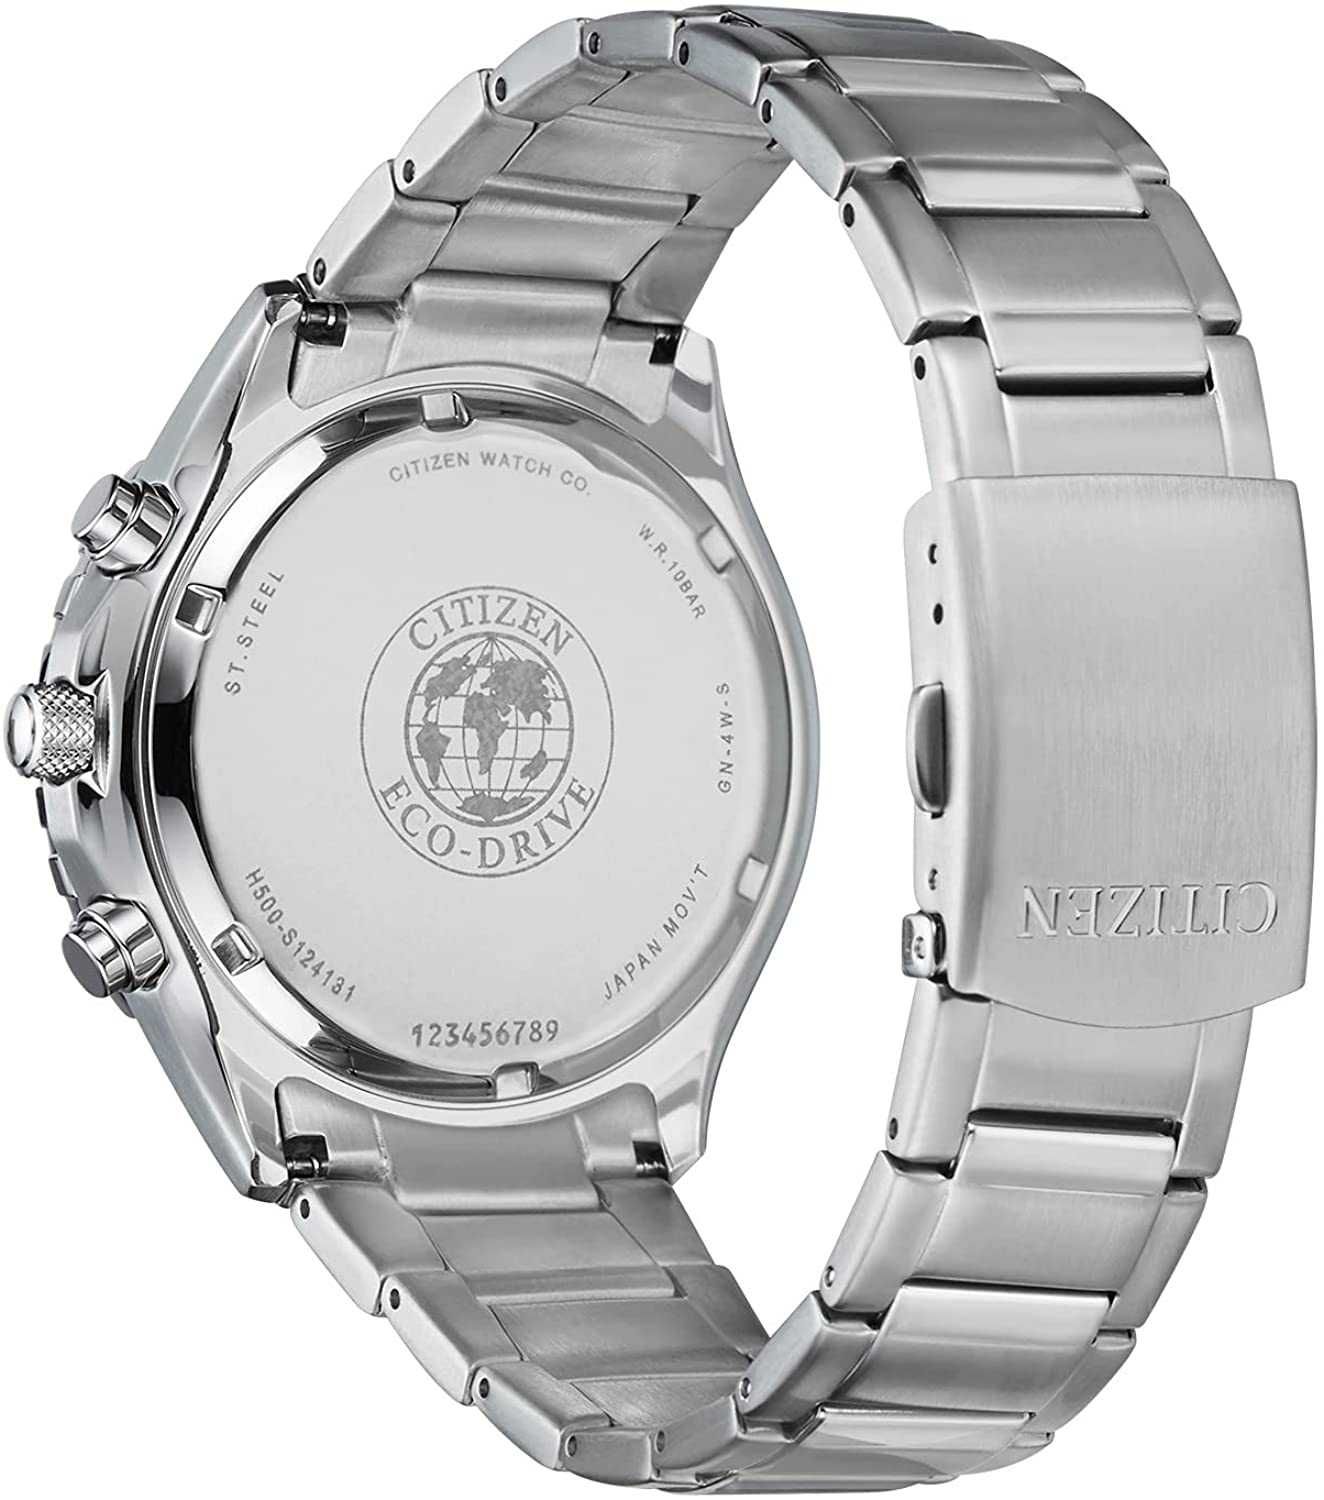 Часы Citizen Sport Luxury Chronograph Eco-Drive Watch! Новые!